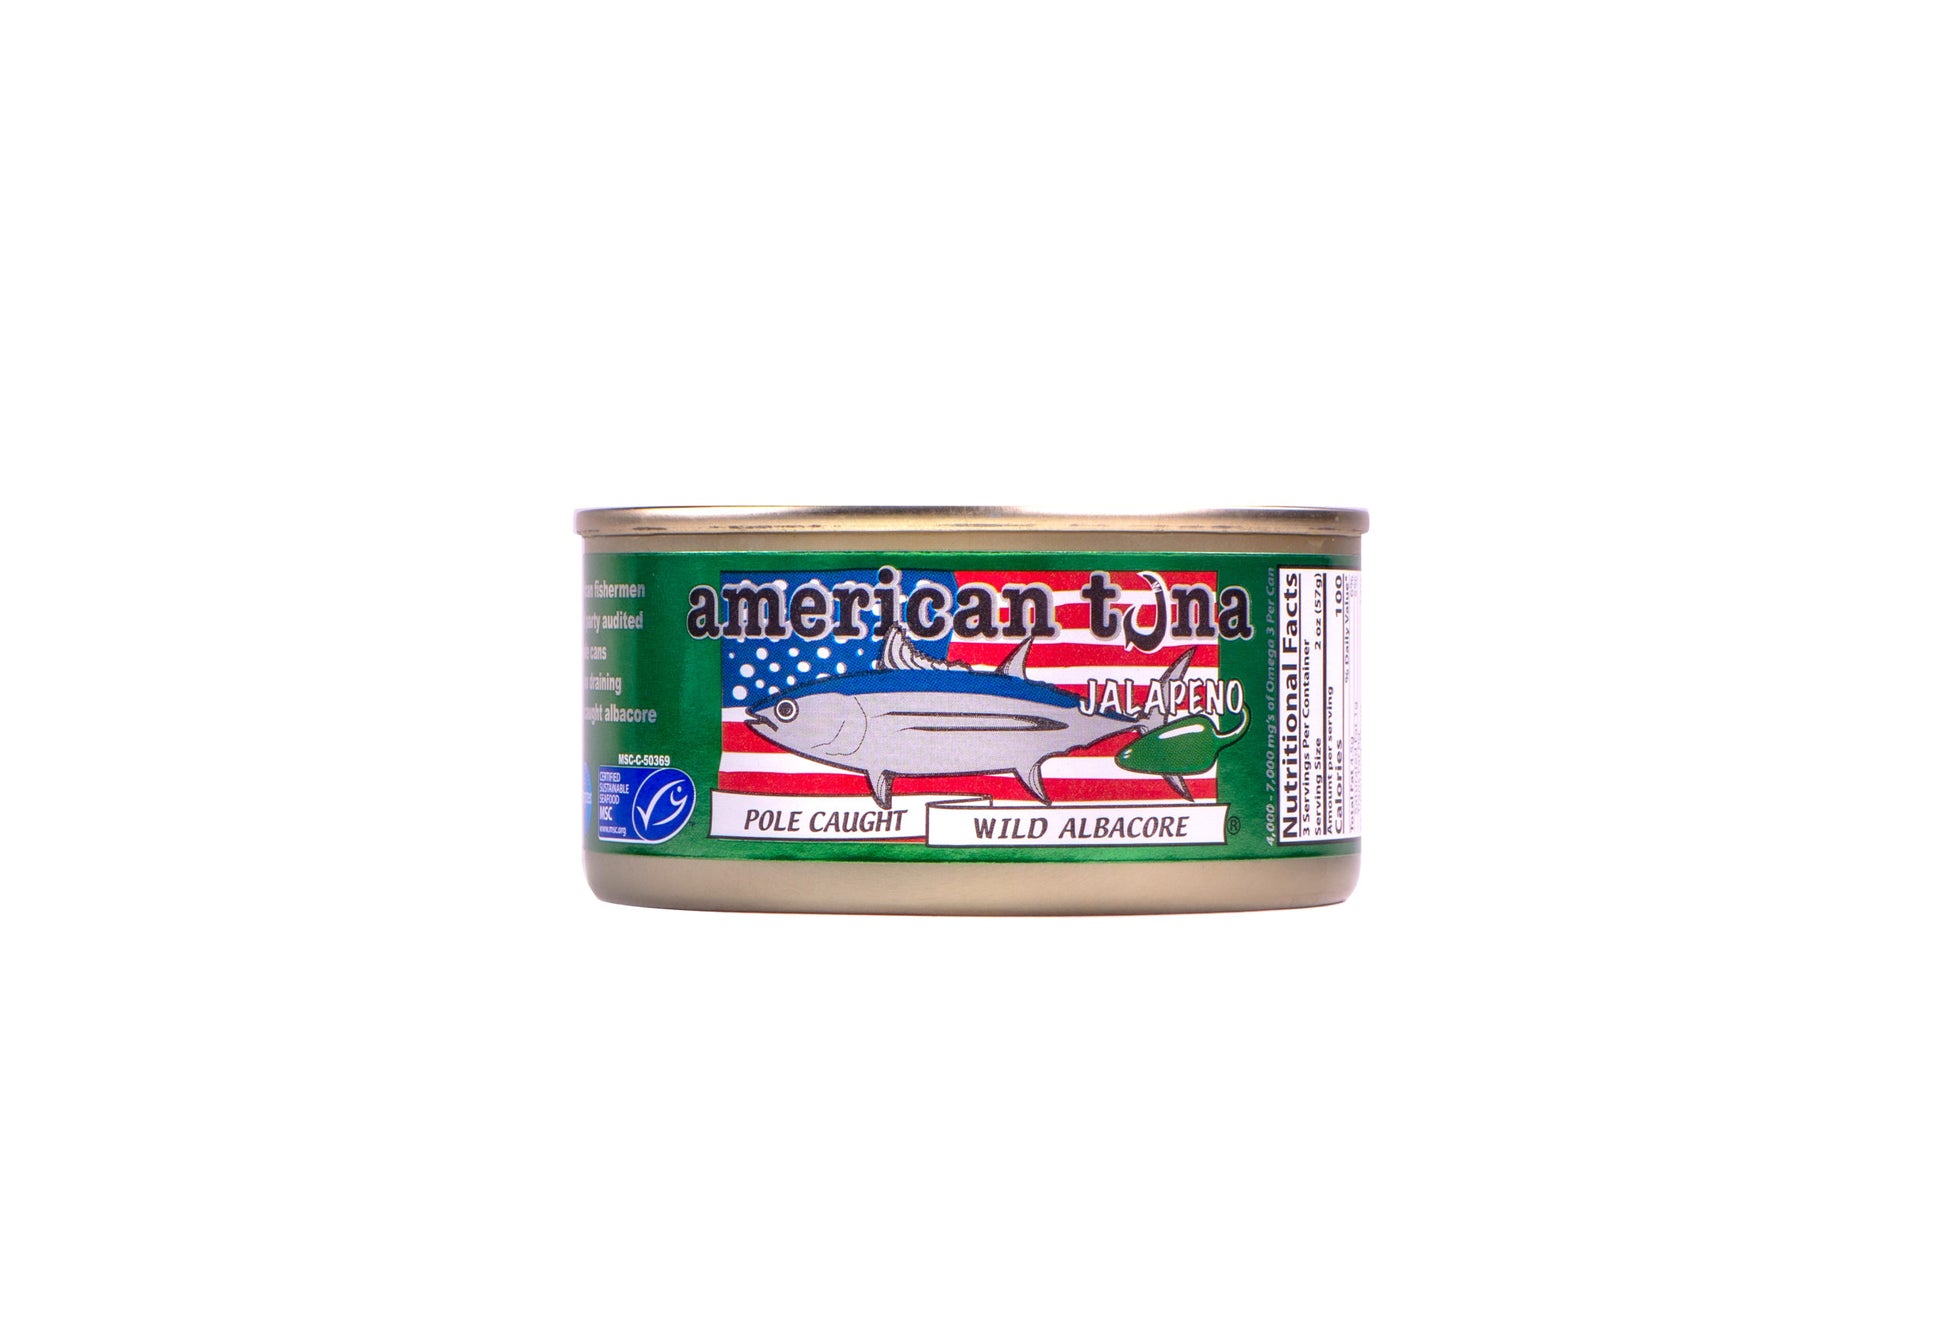 Wild Albacore Tuna with Jalapeño, 6 oz, American Tuna